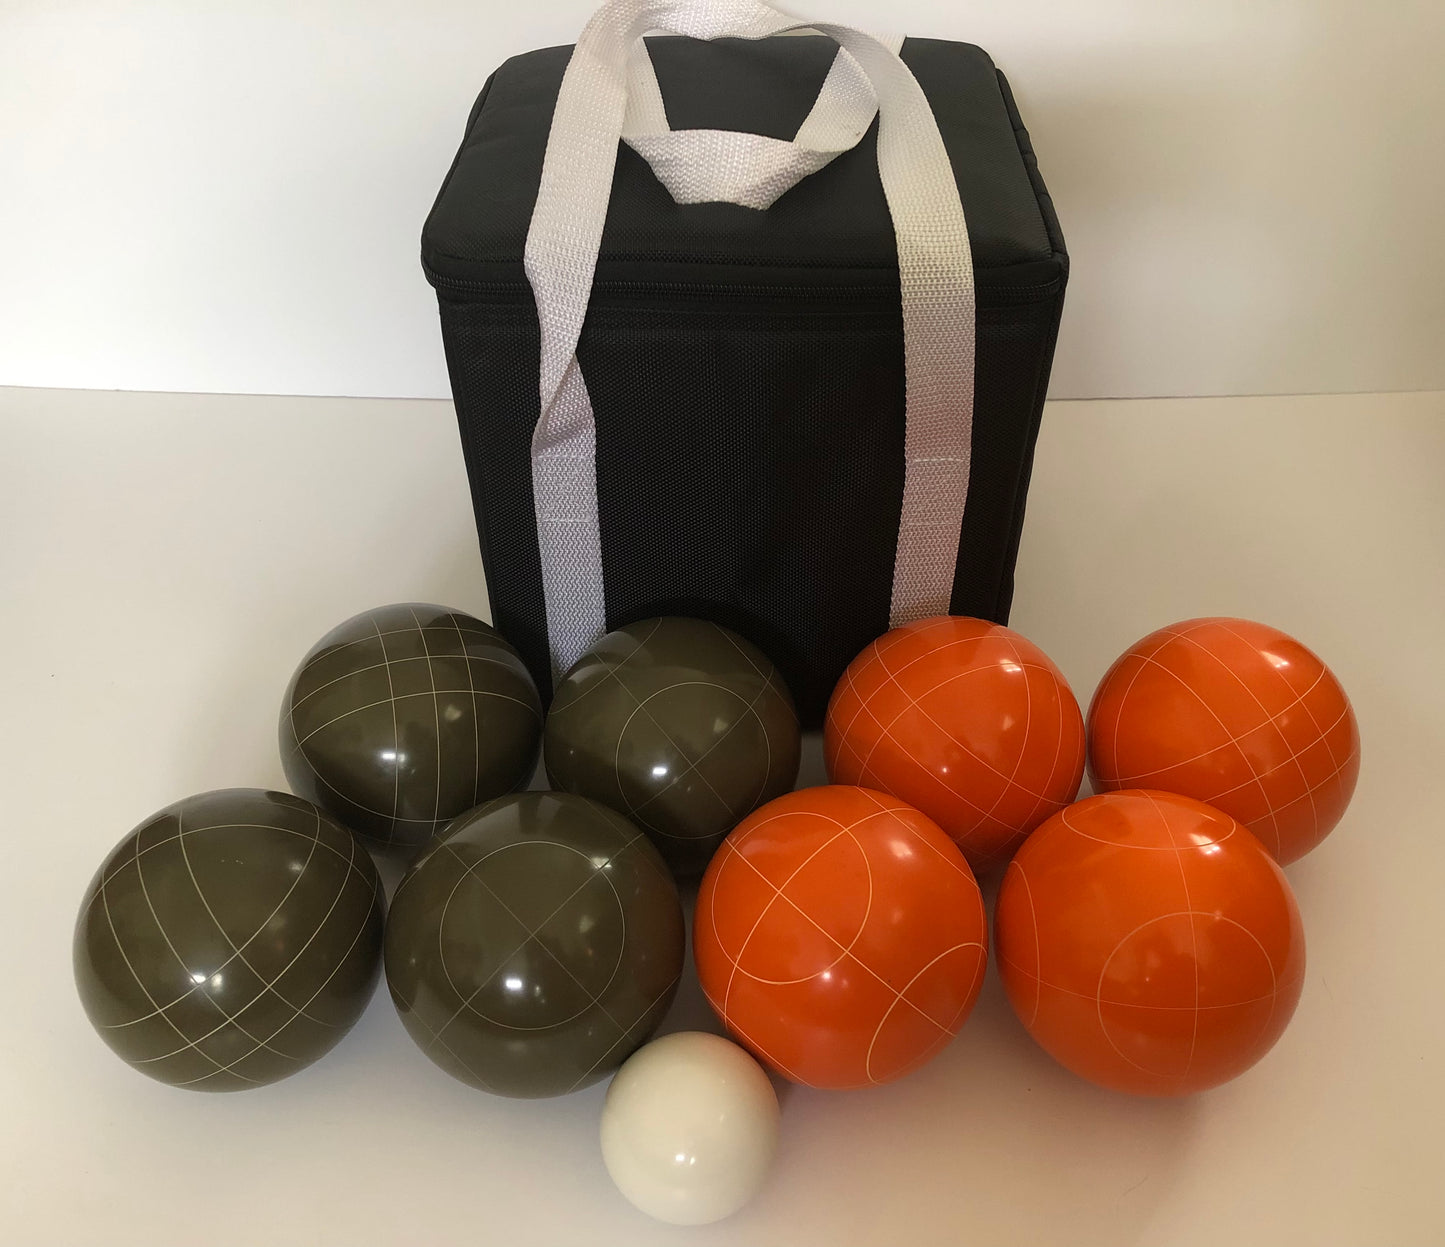 107mm Bocce Olive Brown and Orange Balls with Black Bag